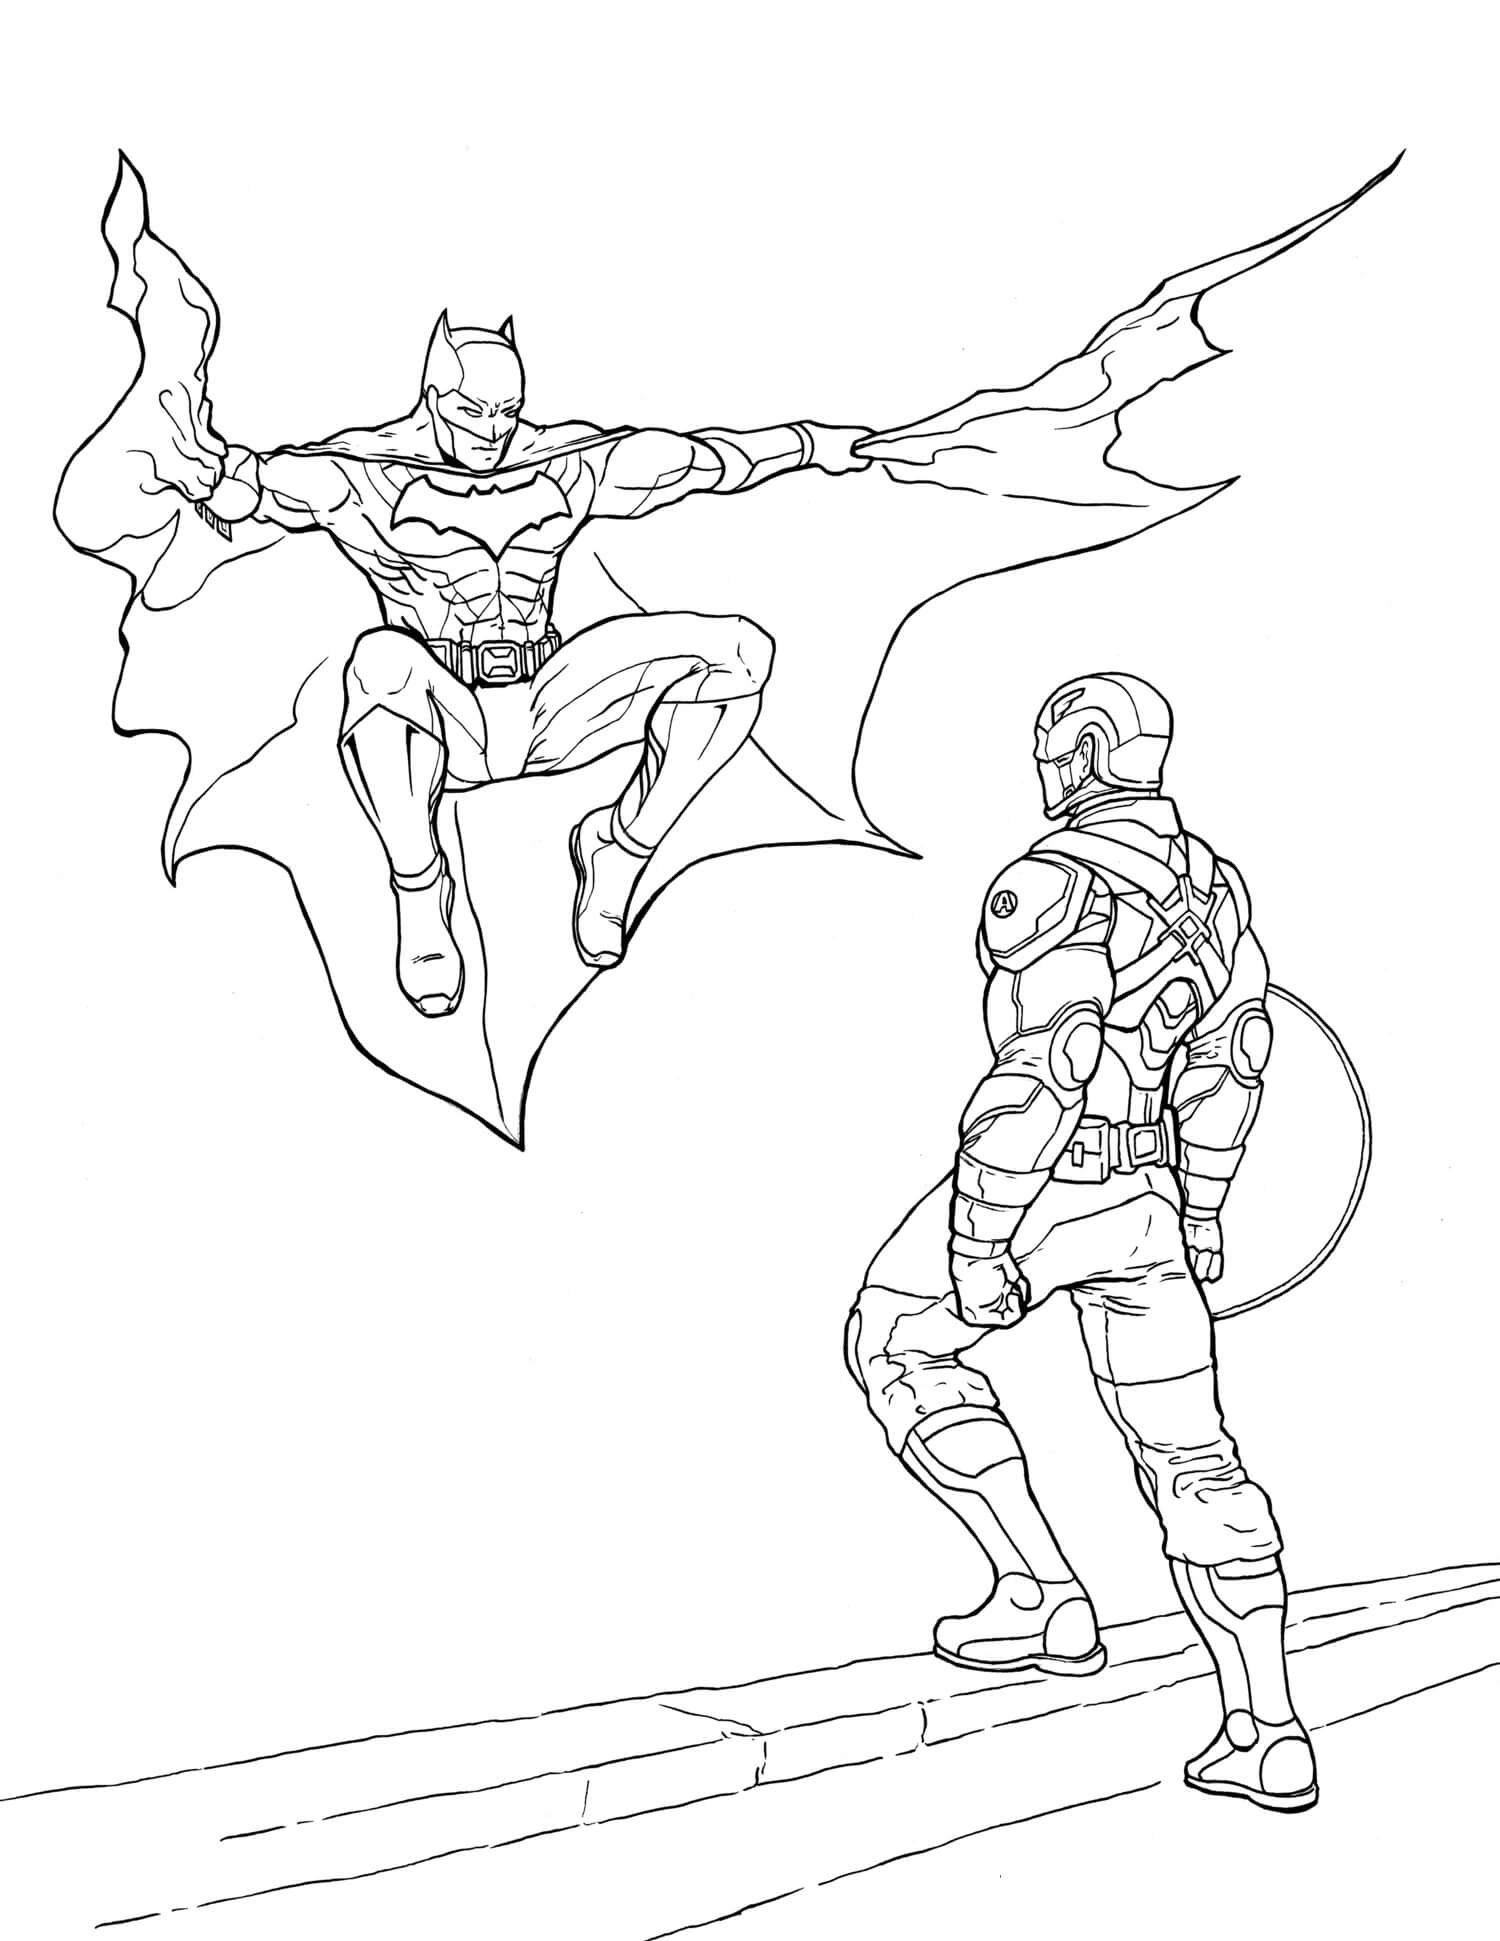 Batman vs Capitan America